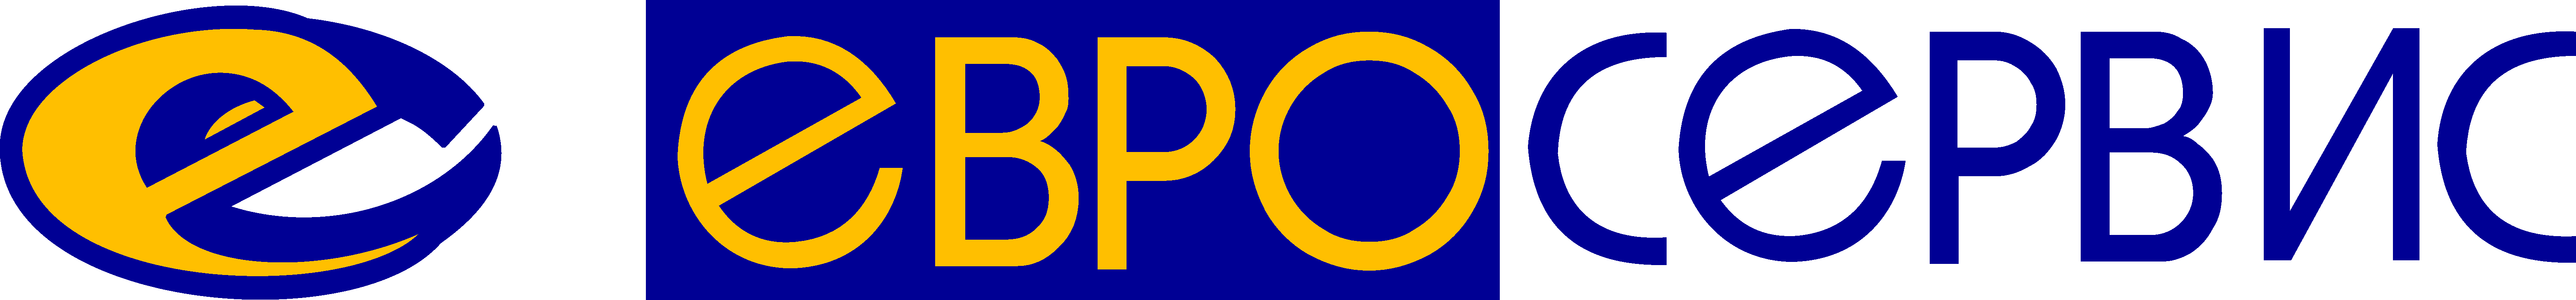 logo in vector